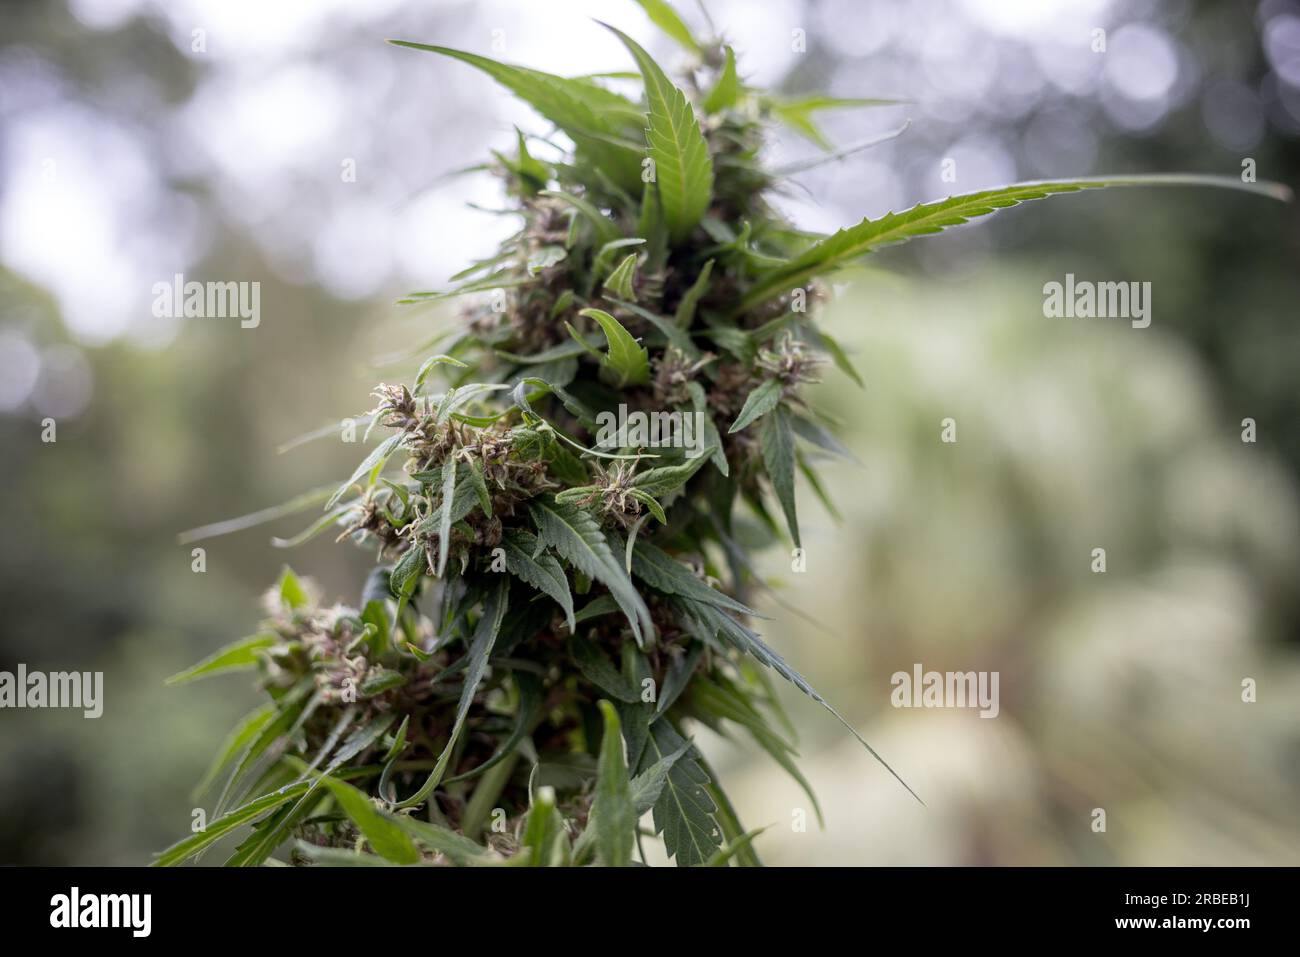 Cannabis Nugs Marijuana Buds On Scale Stock Photo 1380961934